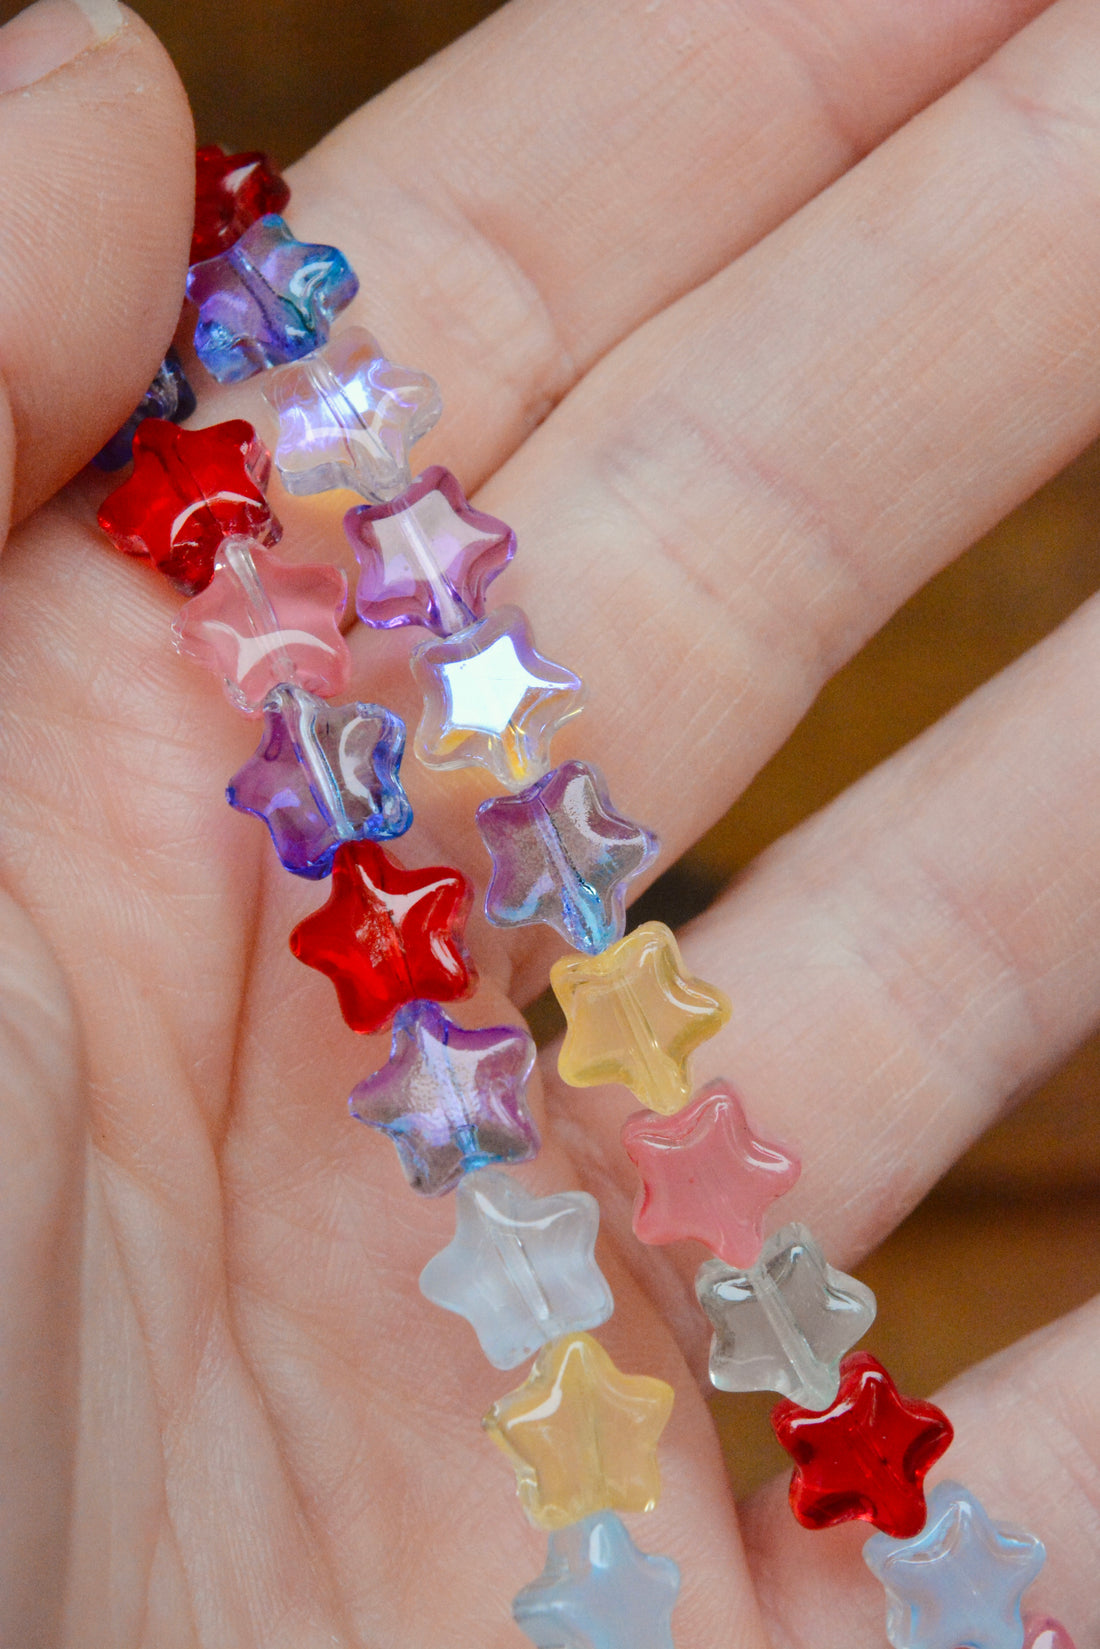 Candy Glass Stars